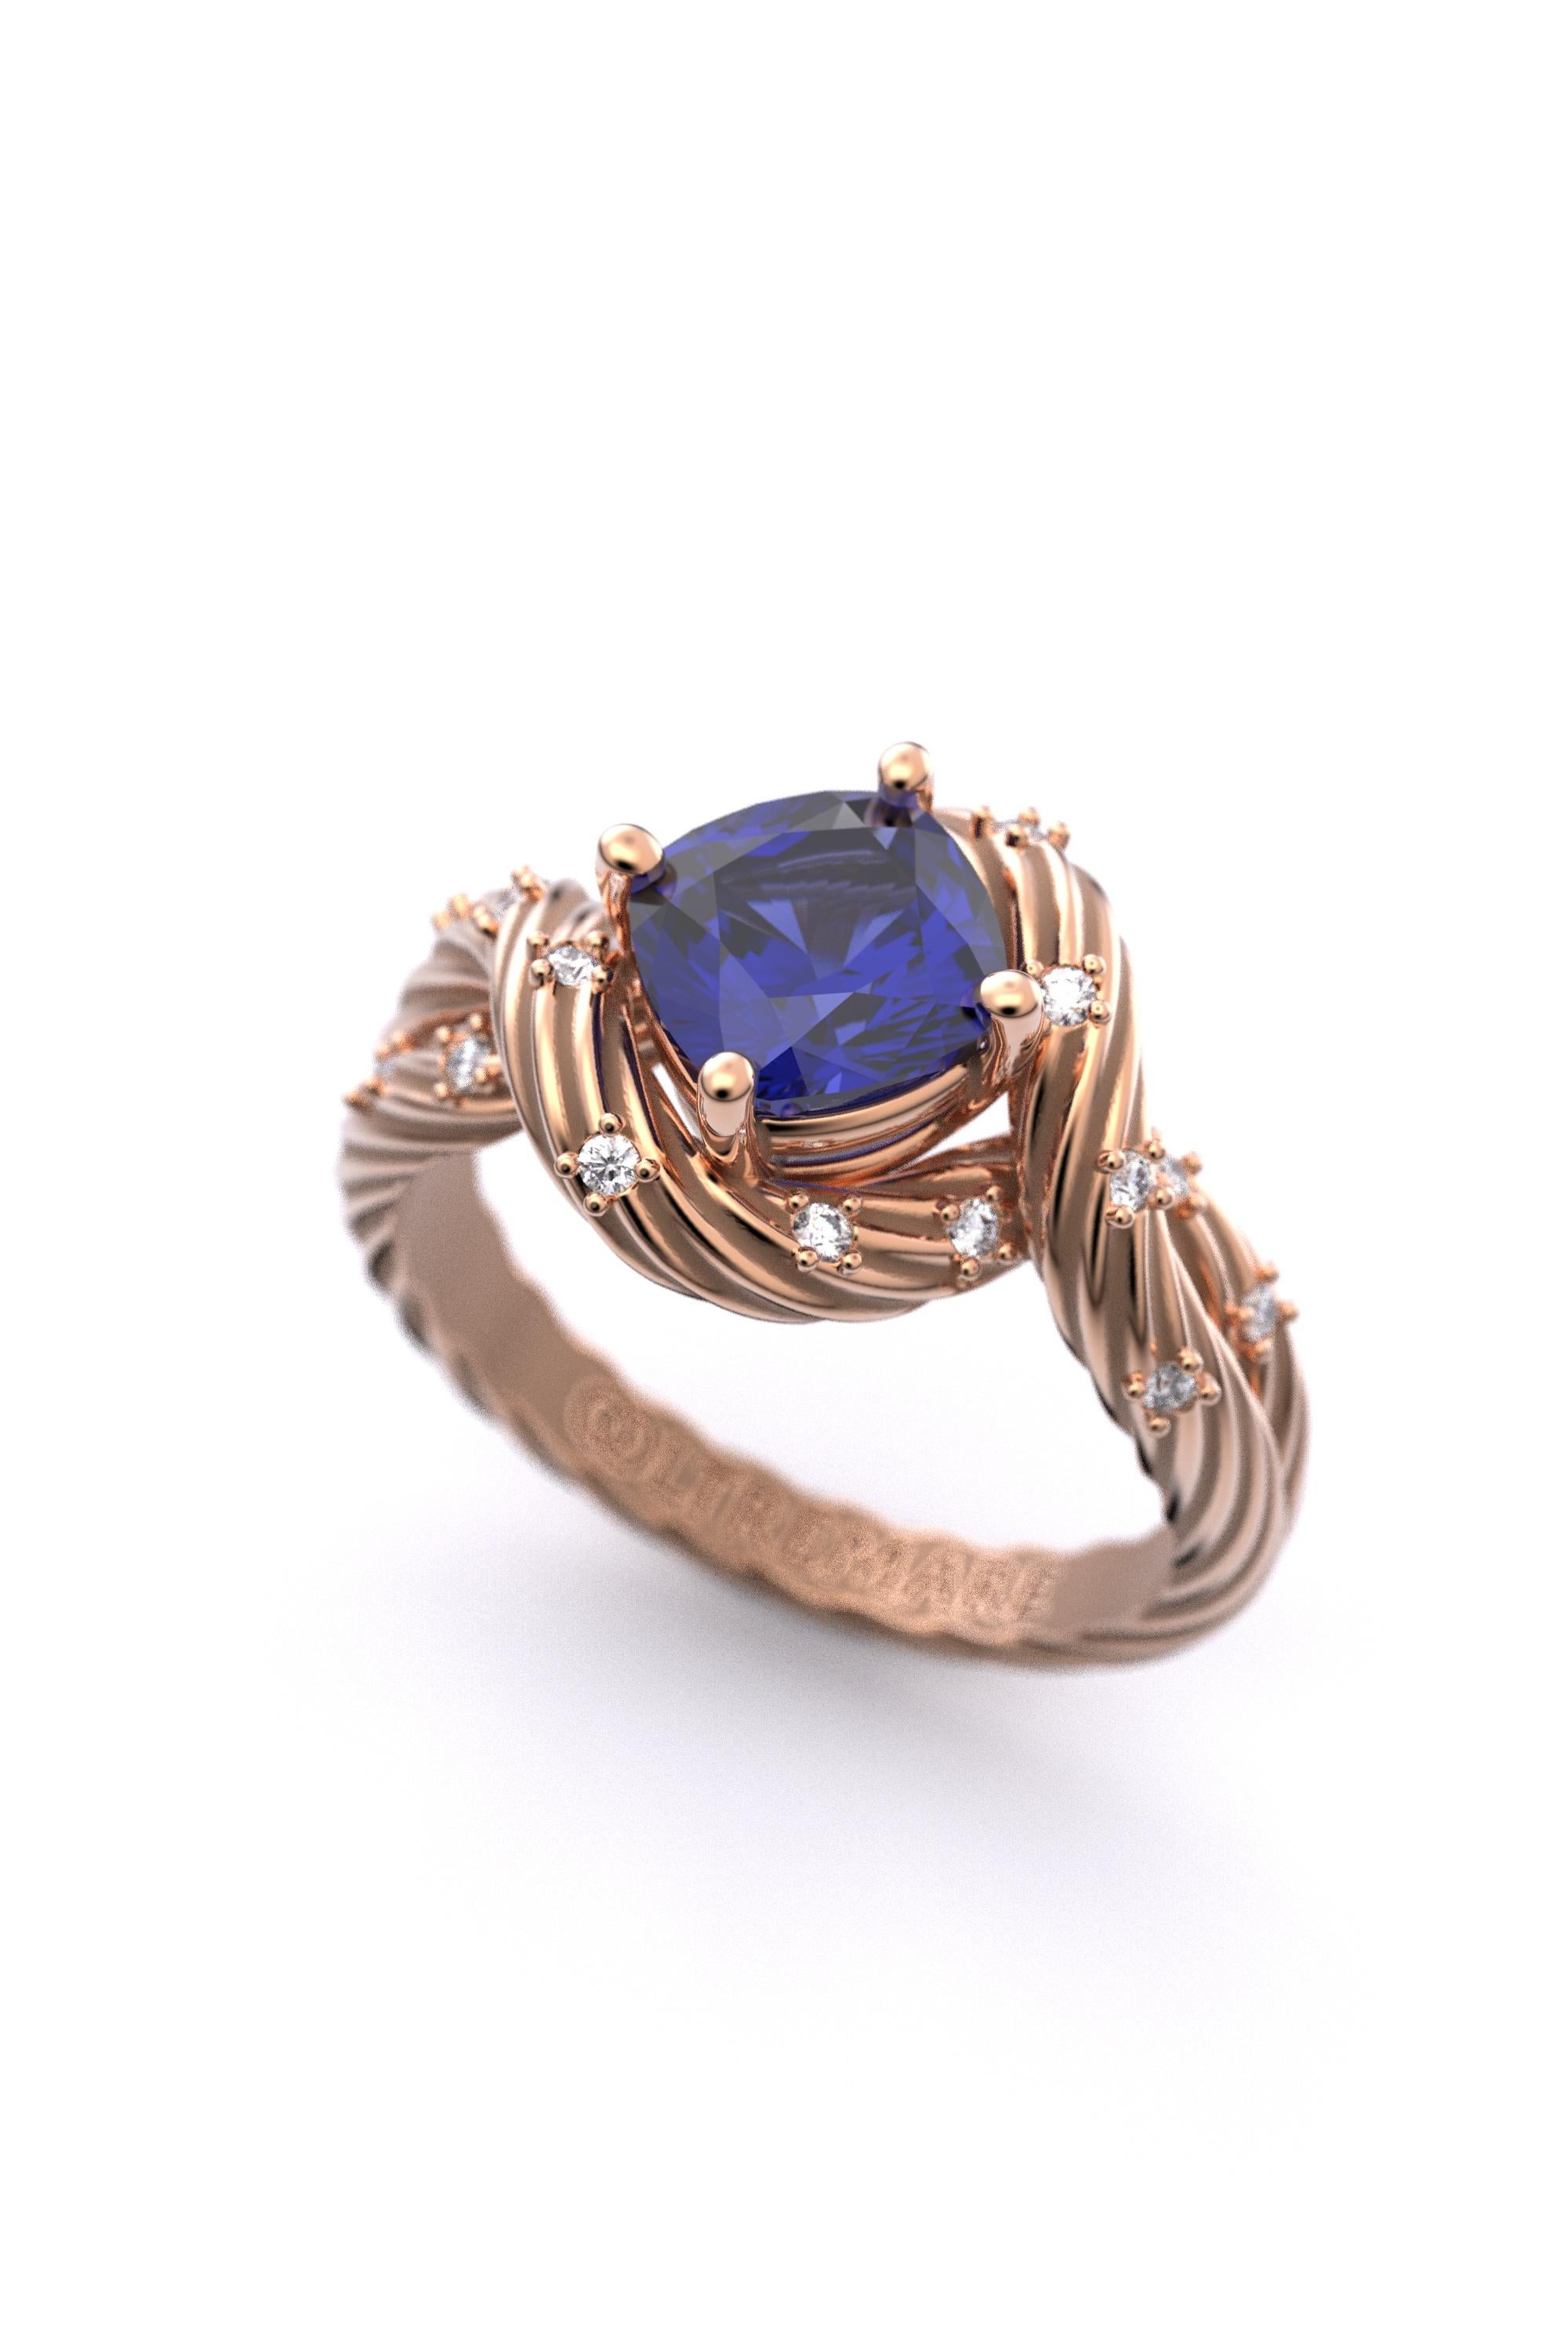 For Sale:  Tanzanite and Diamonds Statement Ring in 18k Solid Gold, Italian Fine Jewelry 5